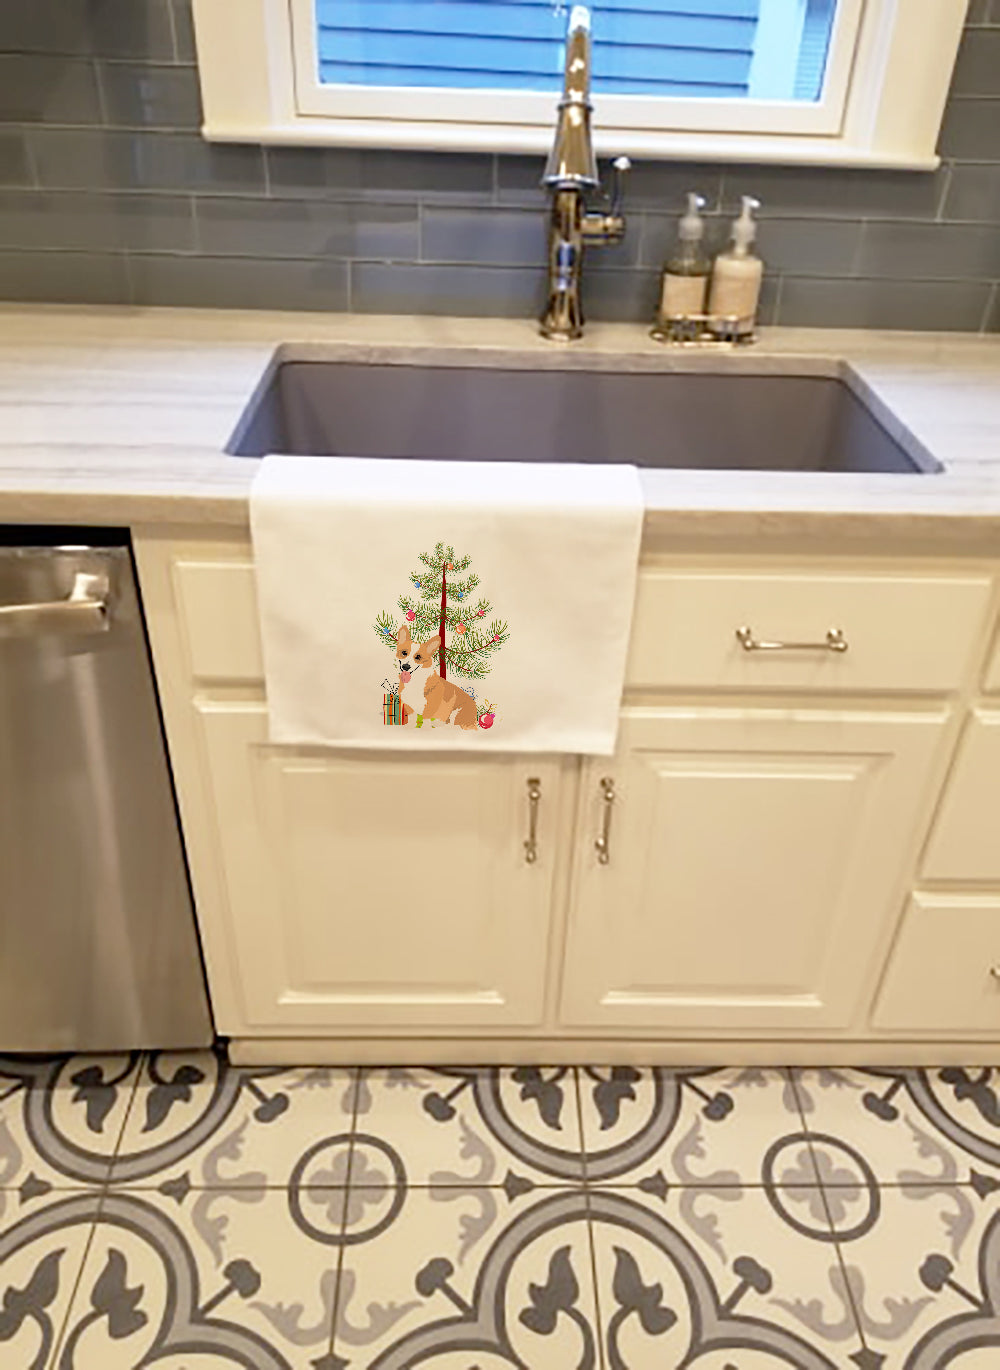 Buy this Pembroke Corgi Red and White Christmas White Kitchen Towel Set of 2